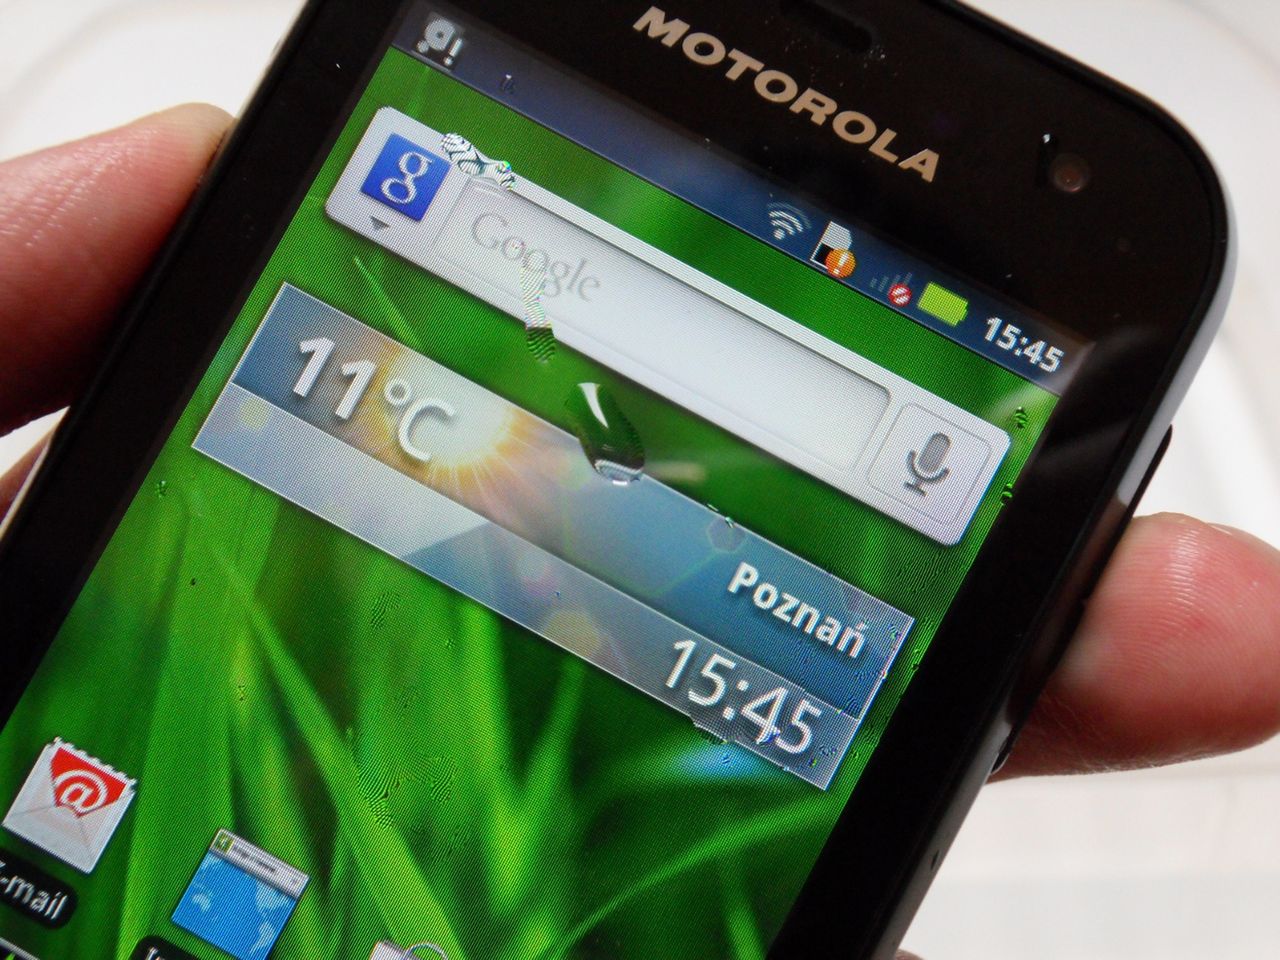 Motorola Defy Mini (fot. wł)